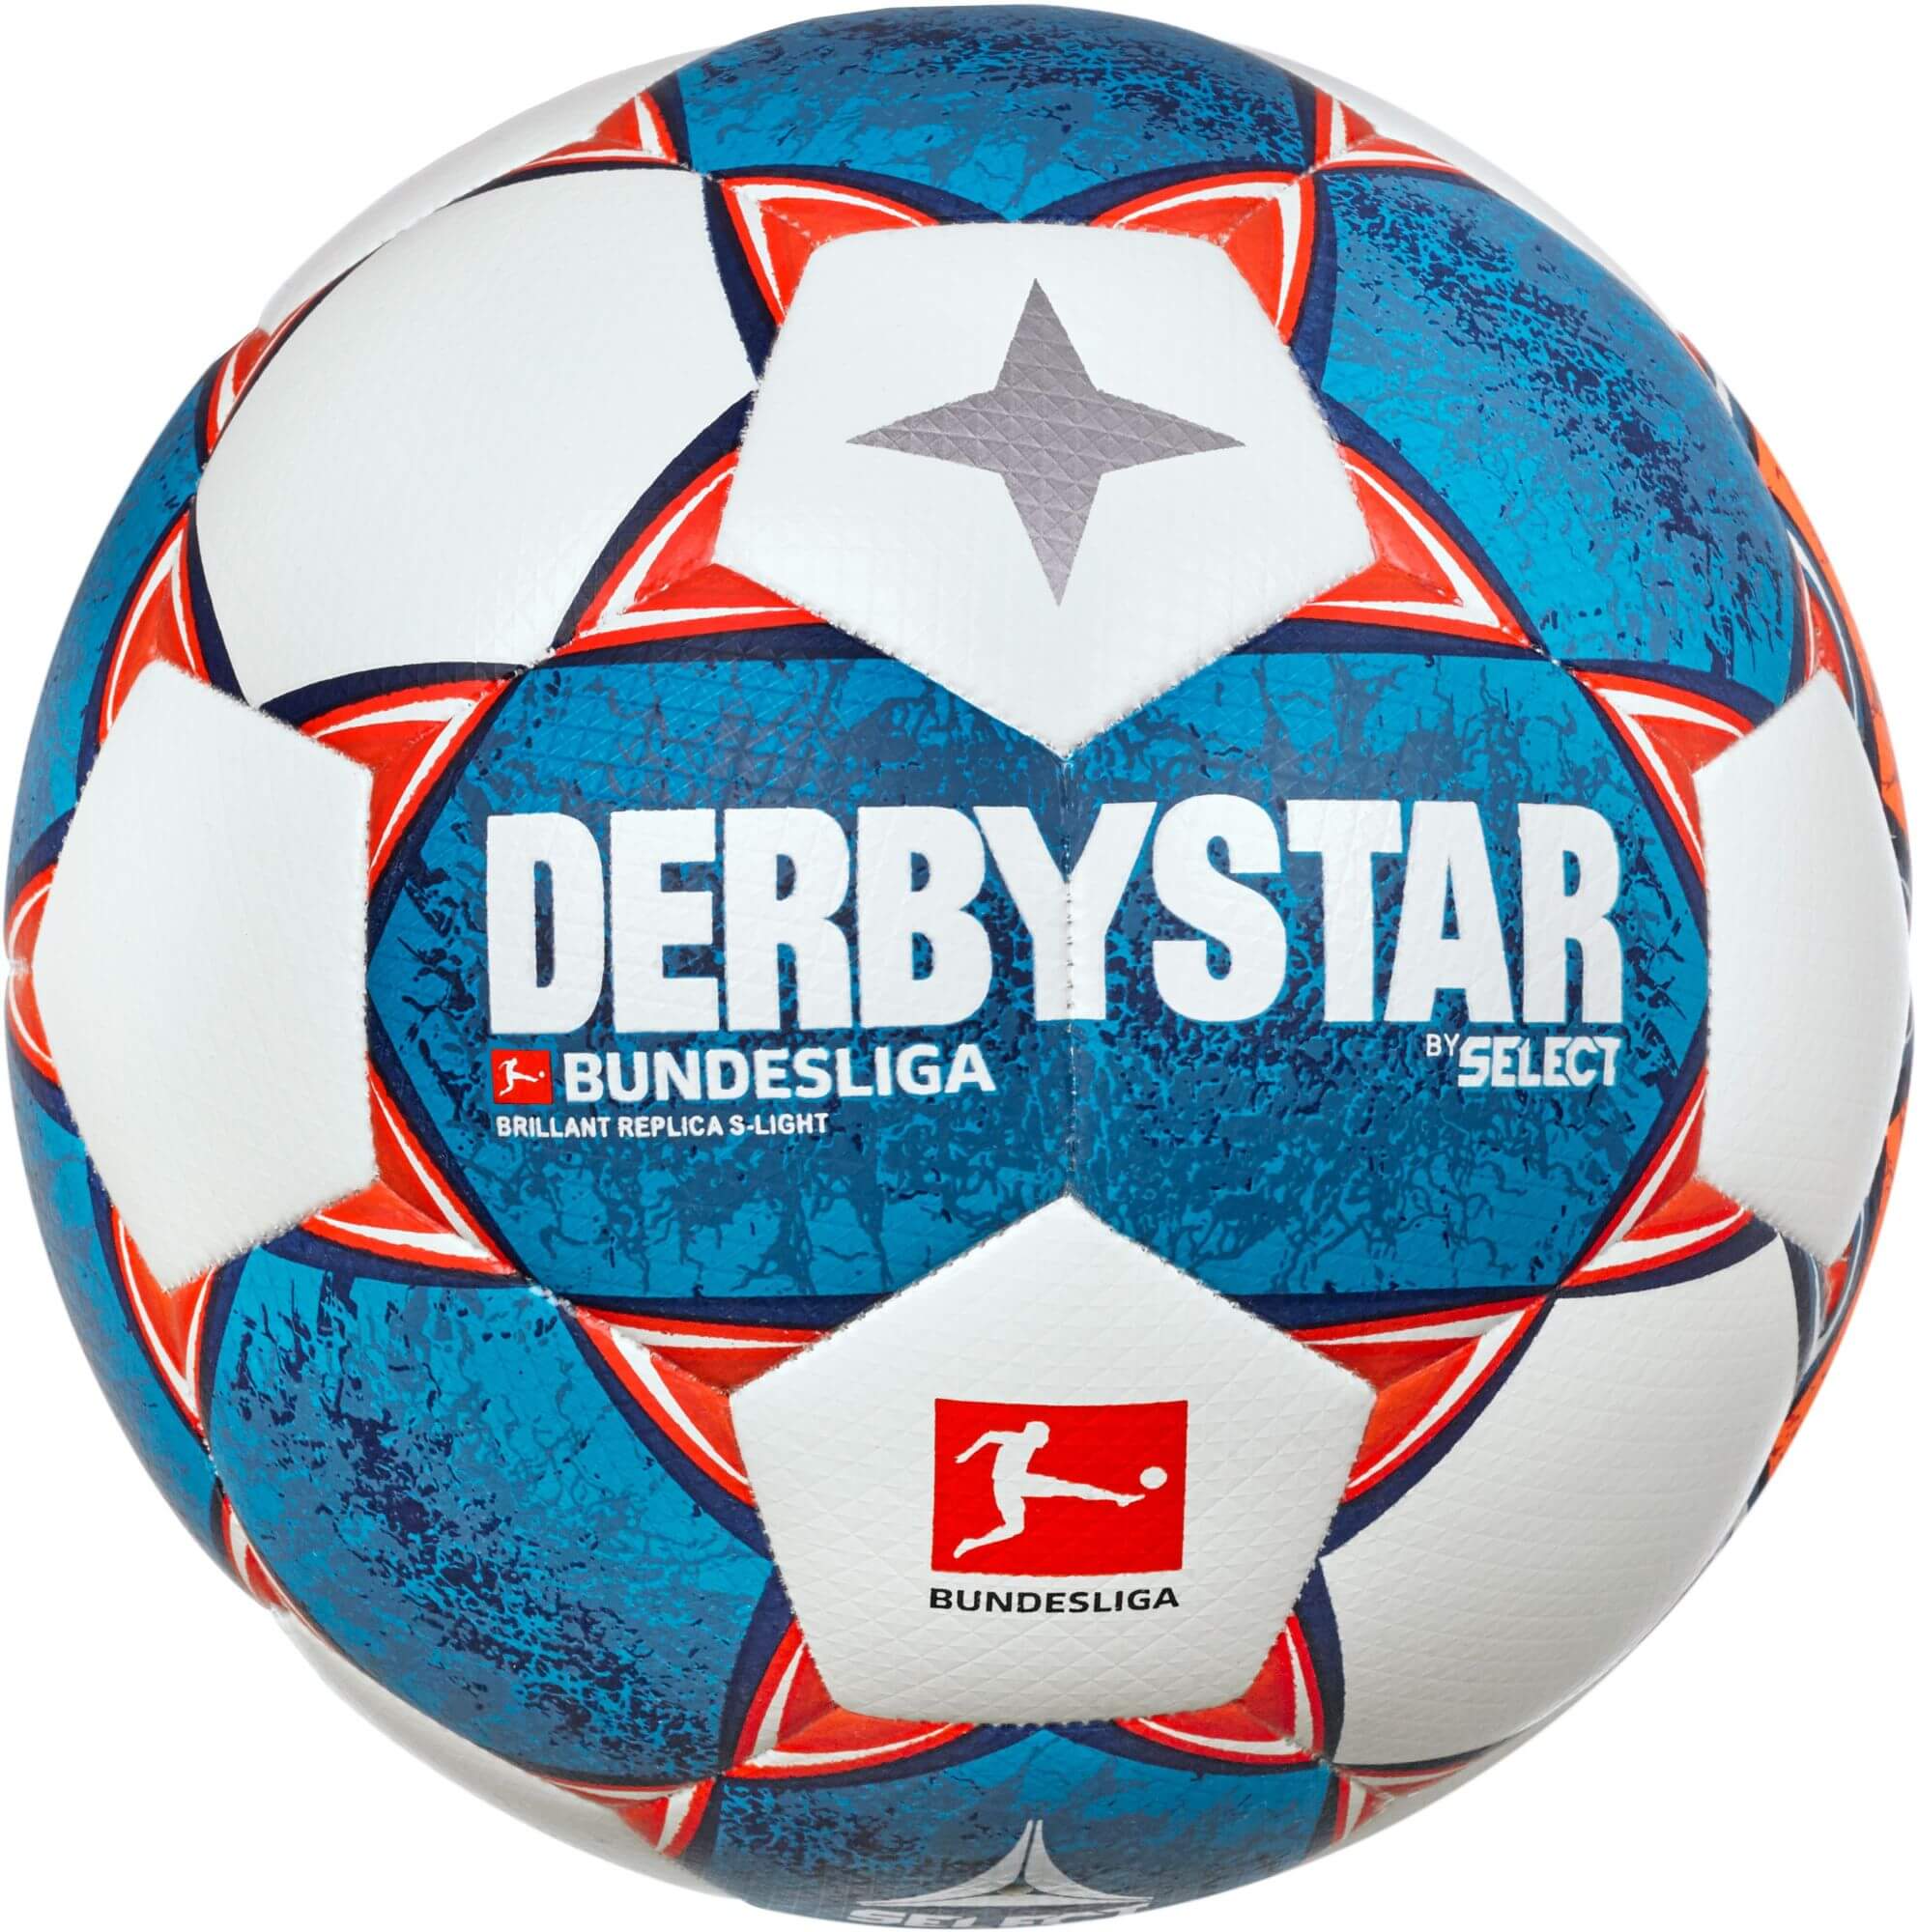 Derbystar Kinder/Jugend Fußball Bundesliga Brillant Replica S-Light V21